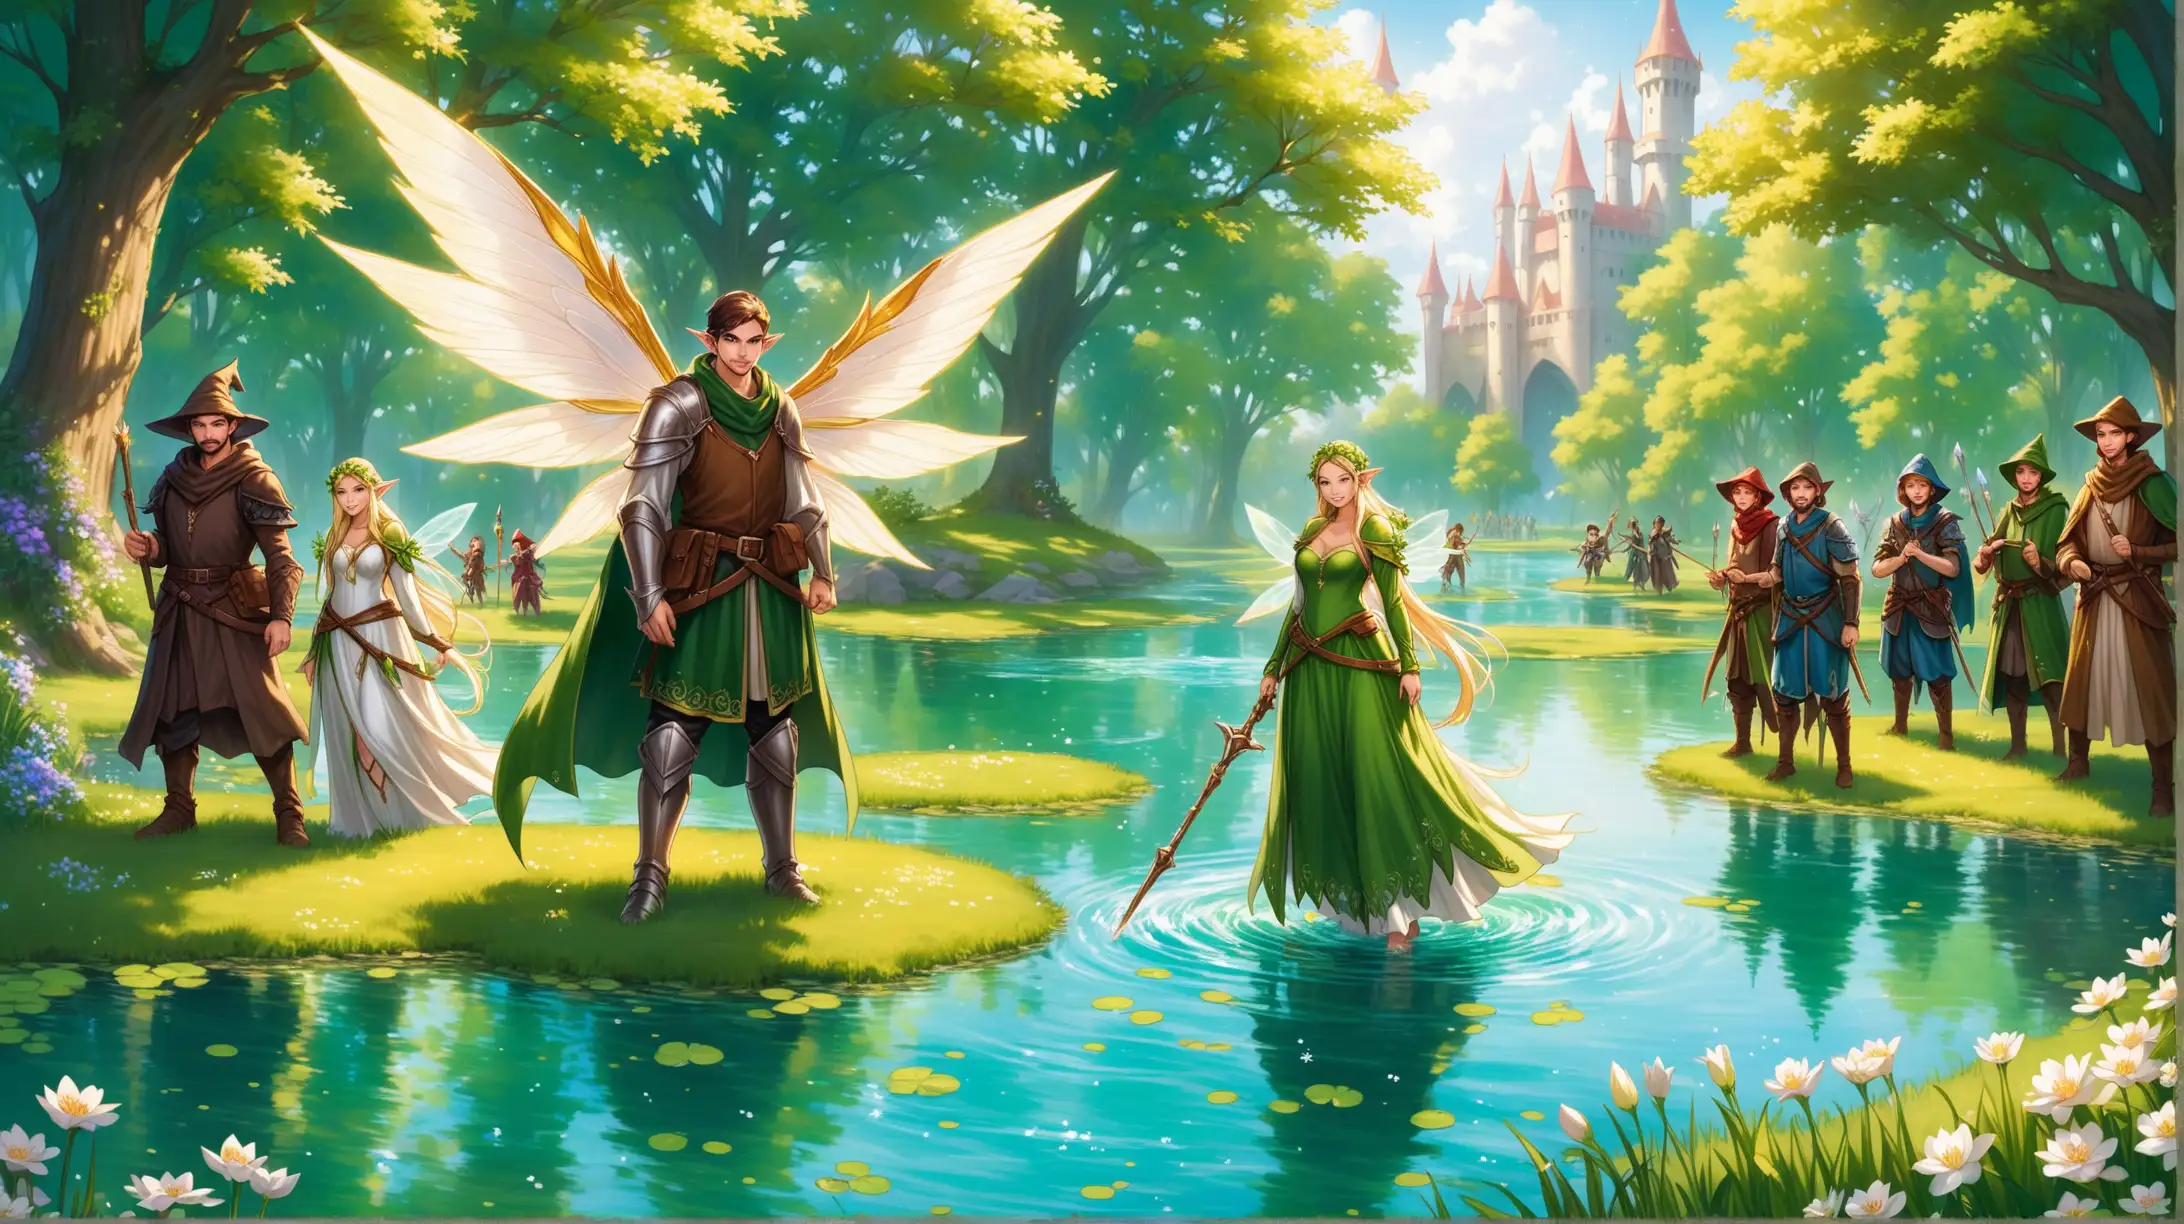 Medieval Fantasy Clique Gathering at Enchanted Pond